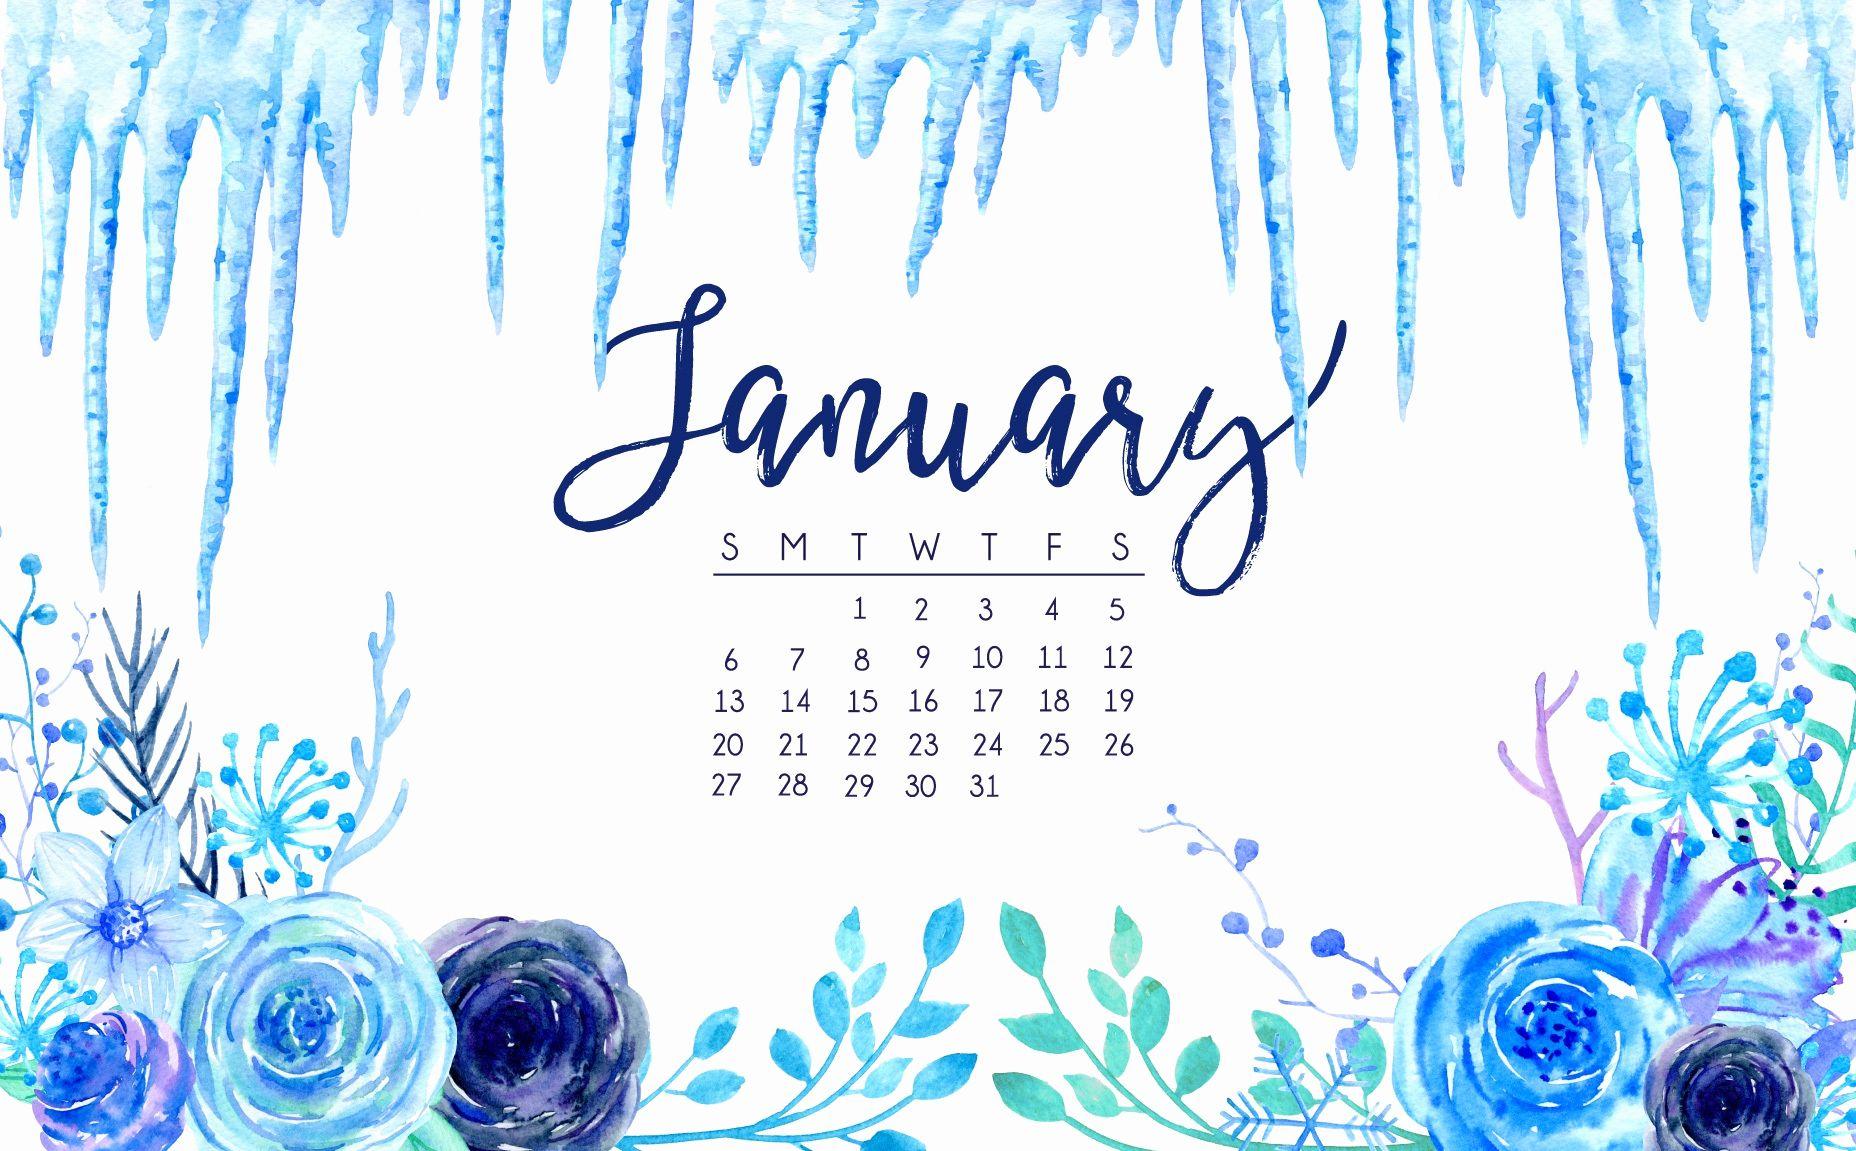 Calendar February 2019 Wallpaper January 2019 HD Calendar Wallpaper